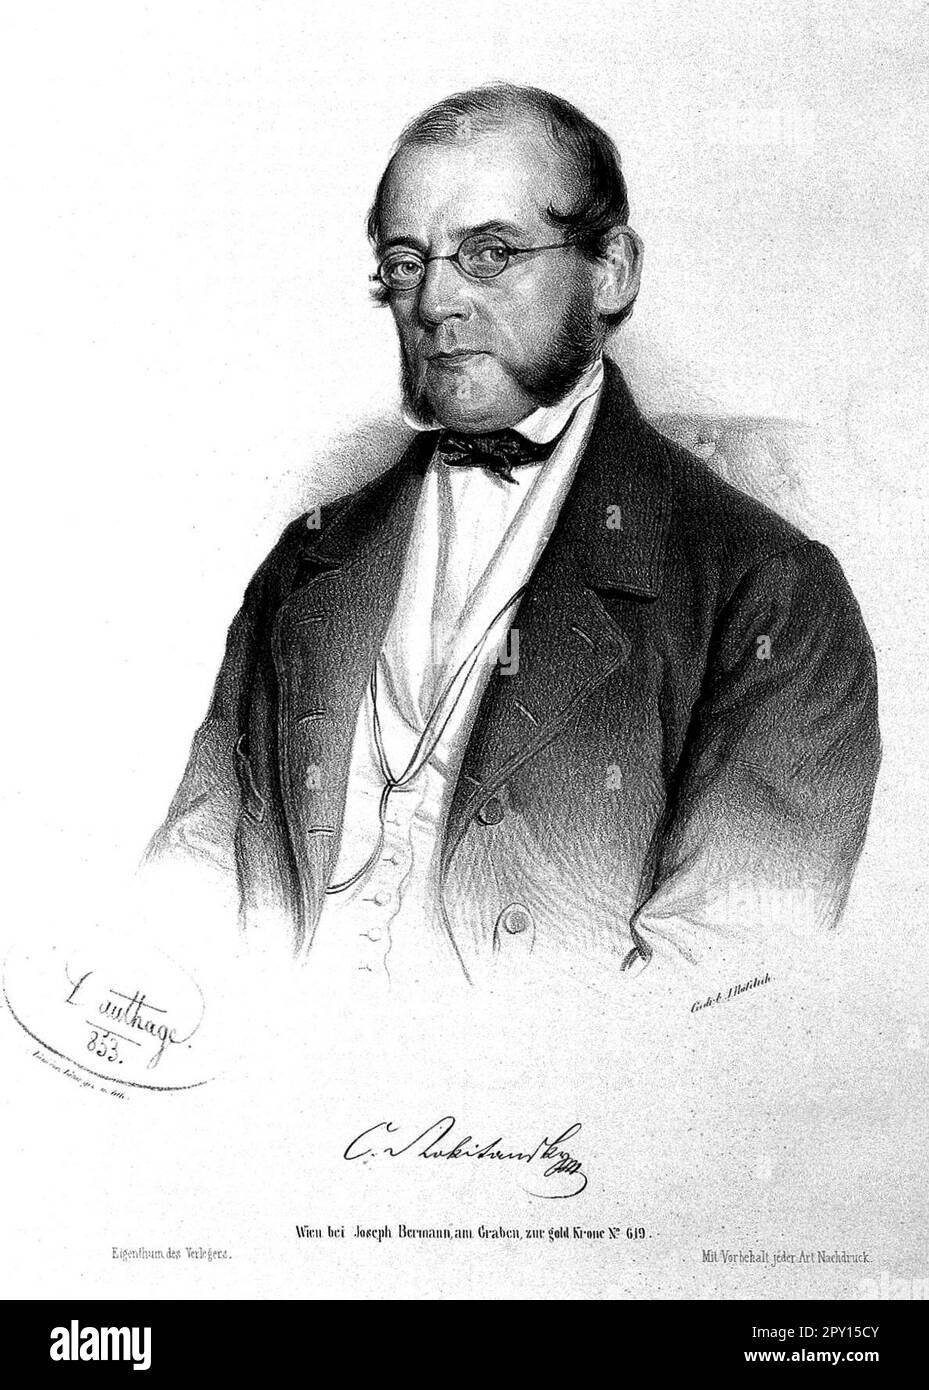 Karl Freiherr von Rokitansky, 1804 – 1878, was an Austrian physician, pathologist, vintage lithograph by Adolf Dauthage 1853 Stock Photo